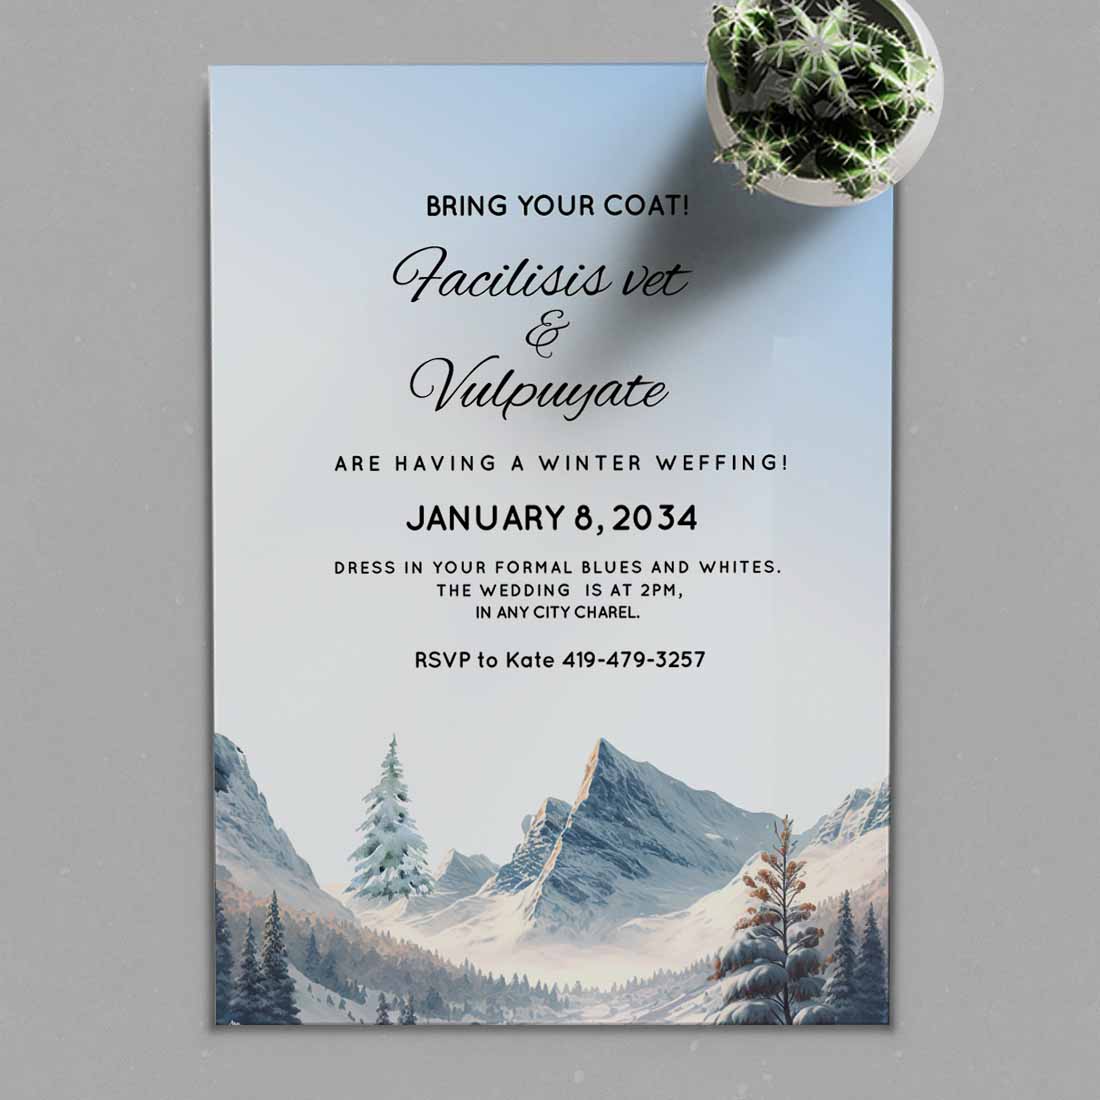 Image of elegant wedding card with winter design